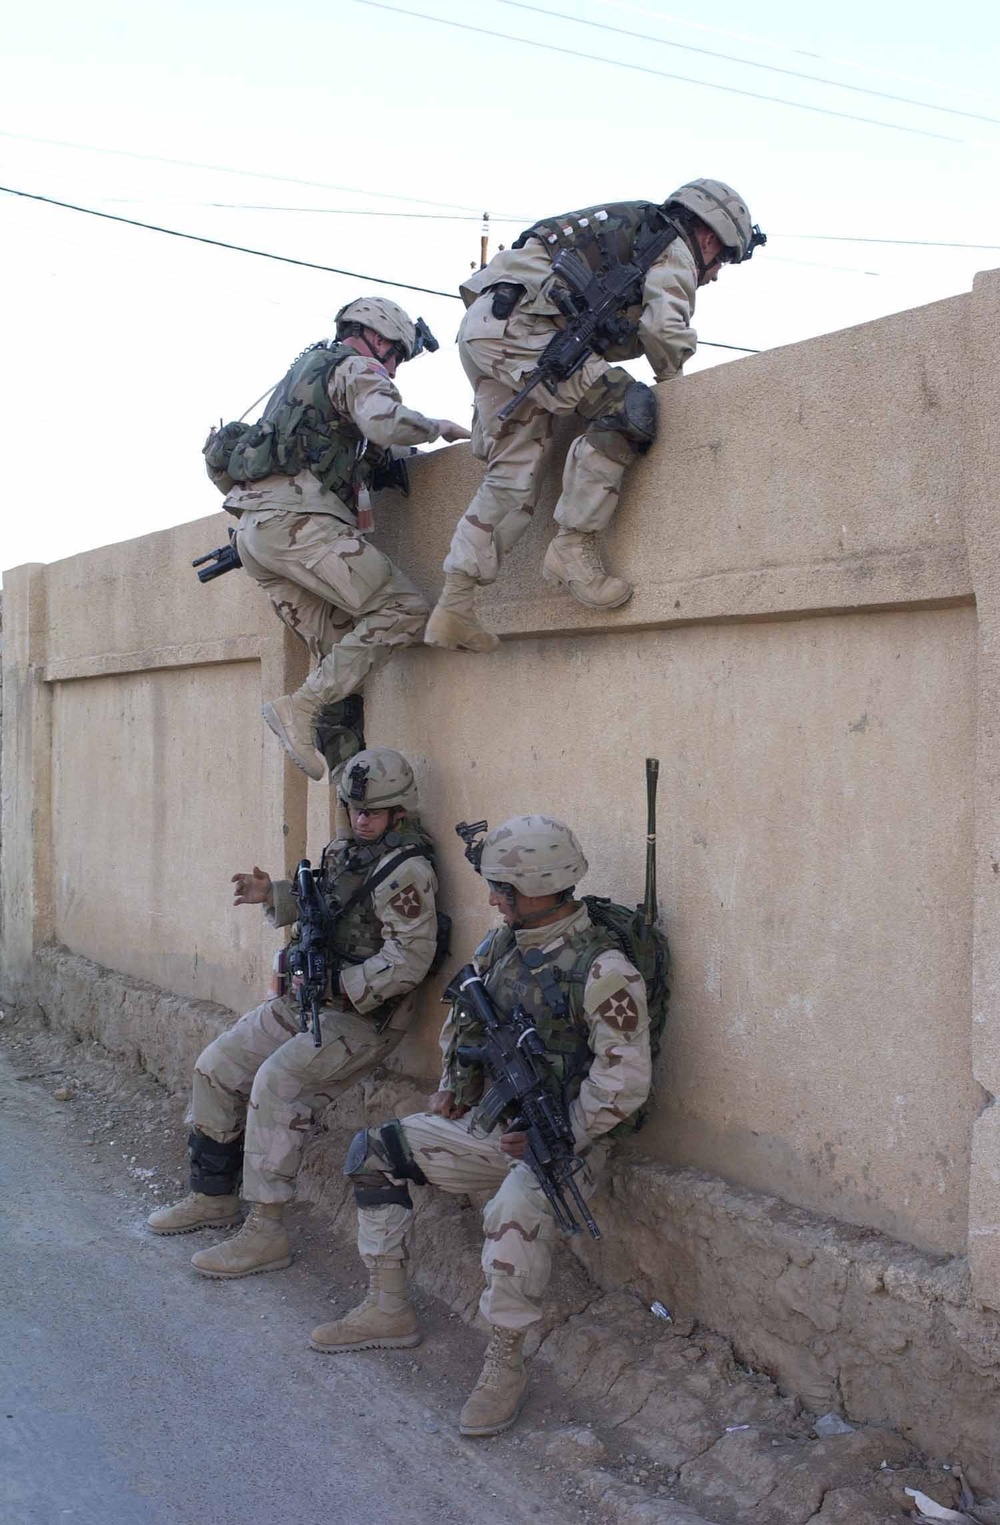 Infantrymen prepare and execute a major raid